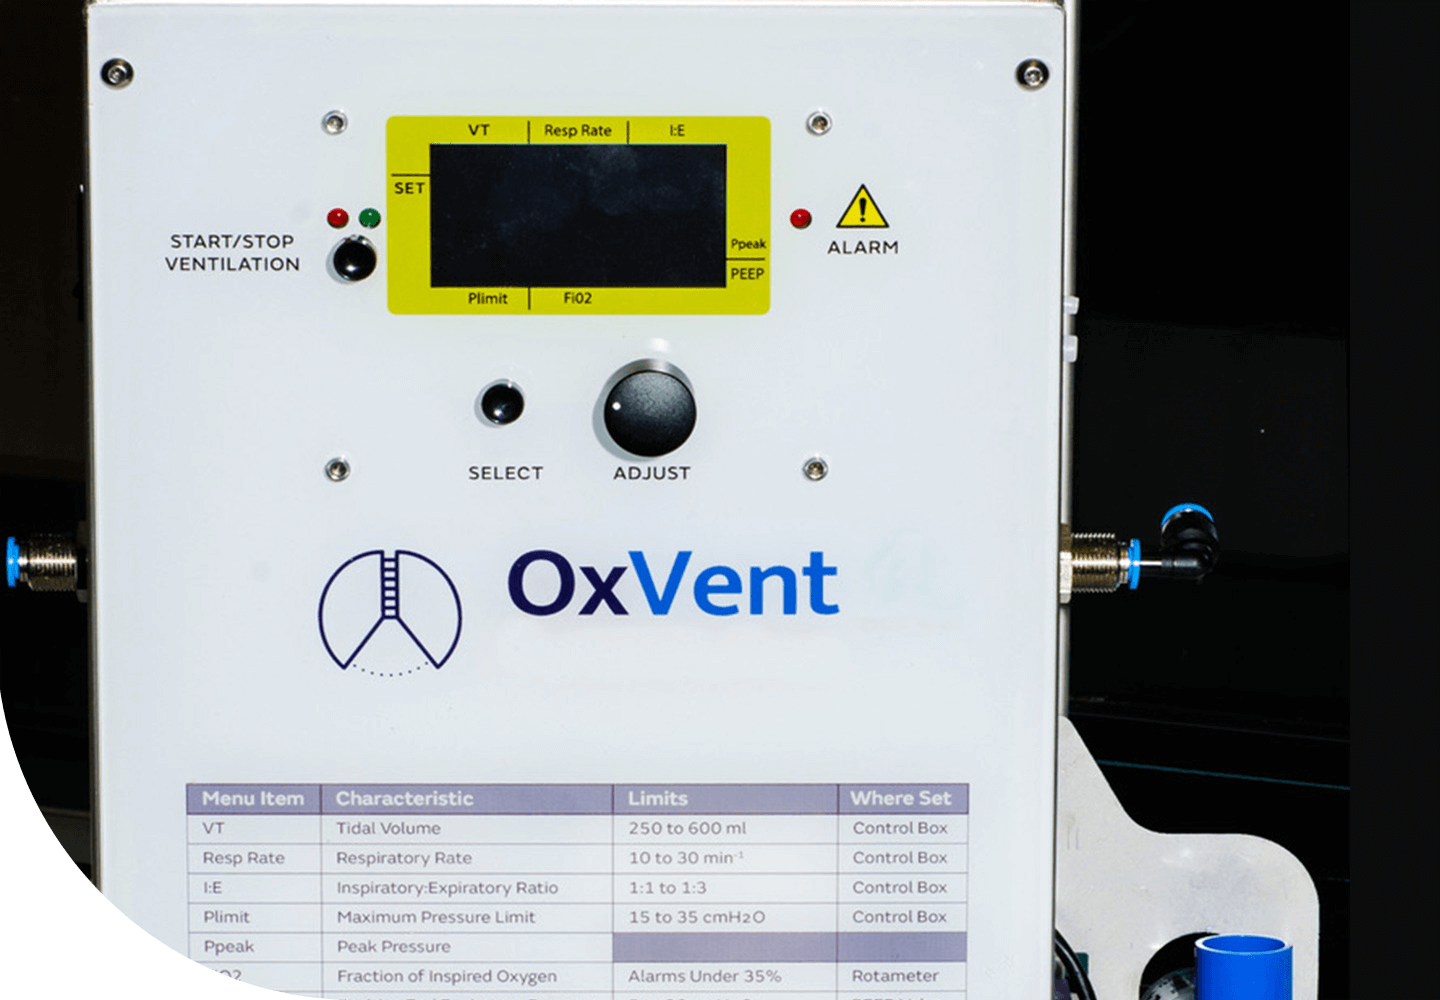 The Oxvent Ventilator